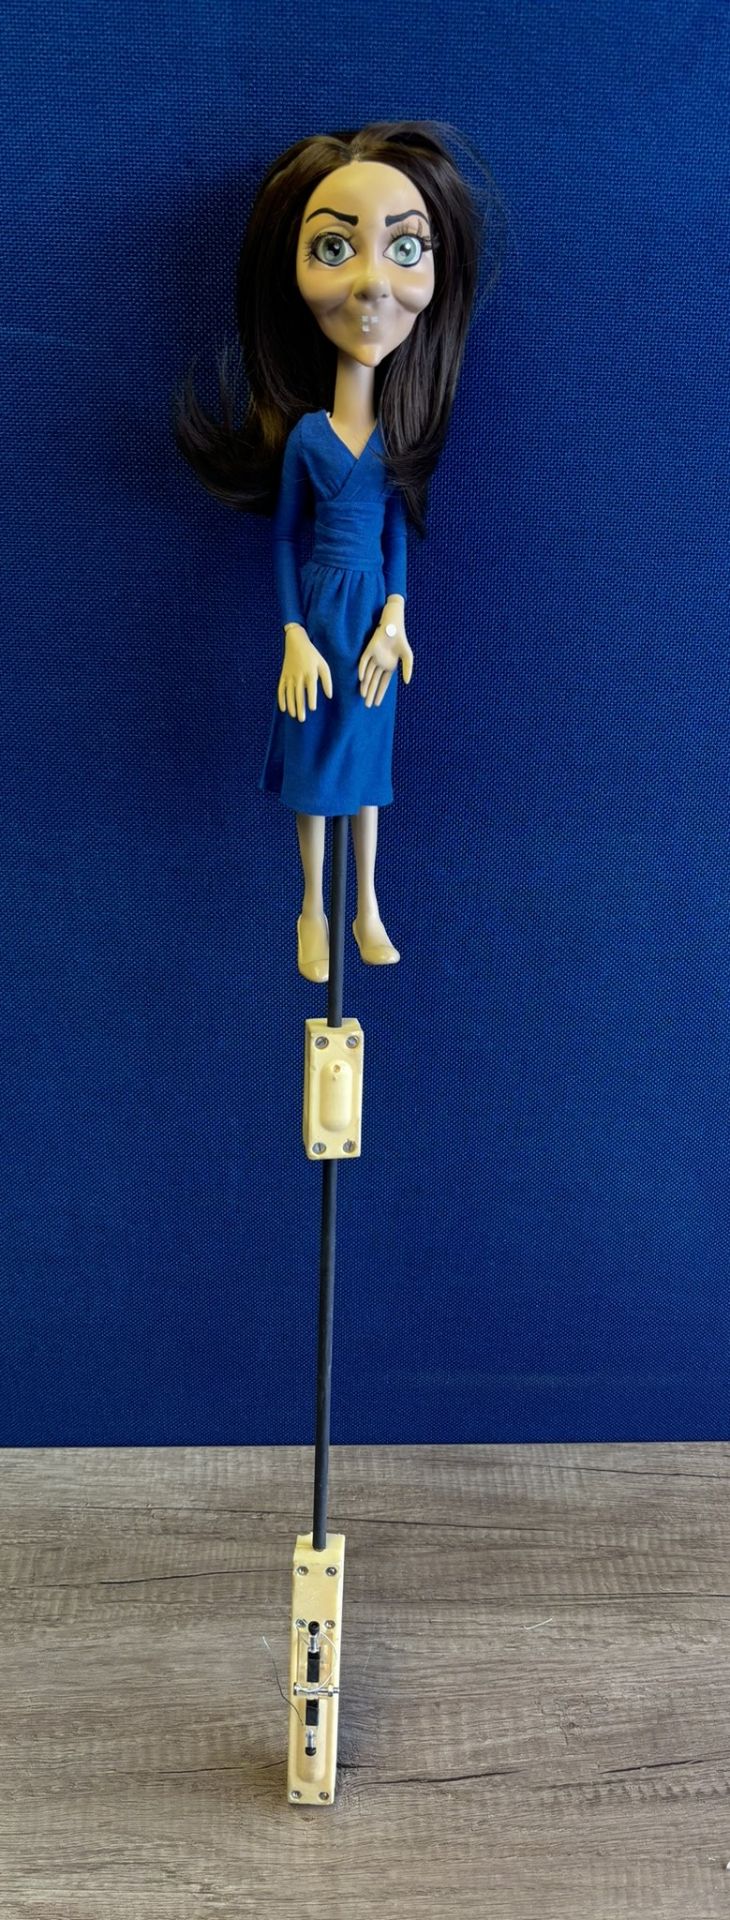 Newzoid puppet - Kate Middleton - Image 3 of 3